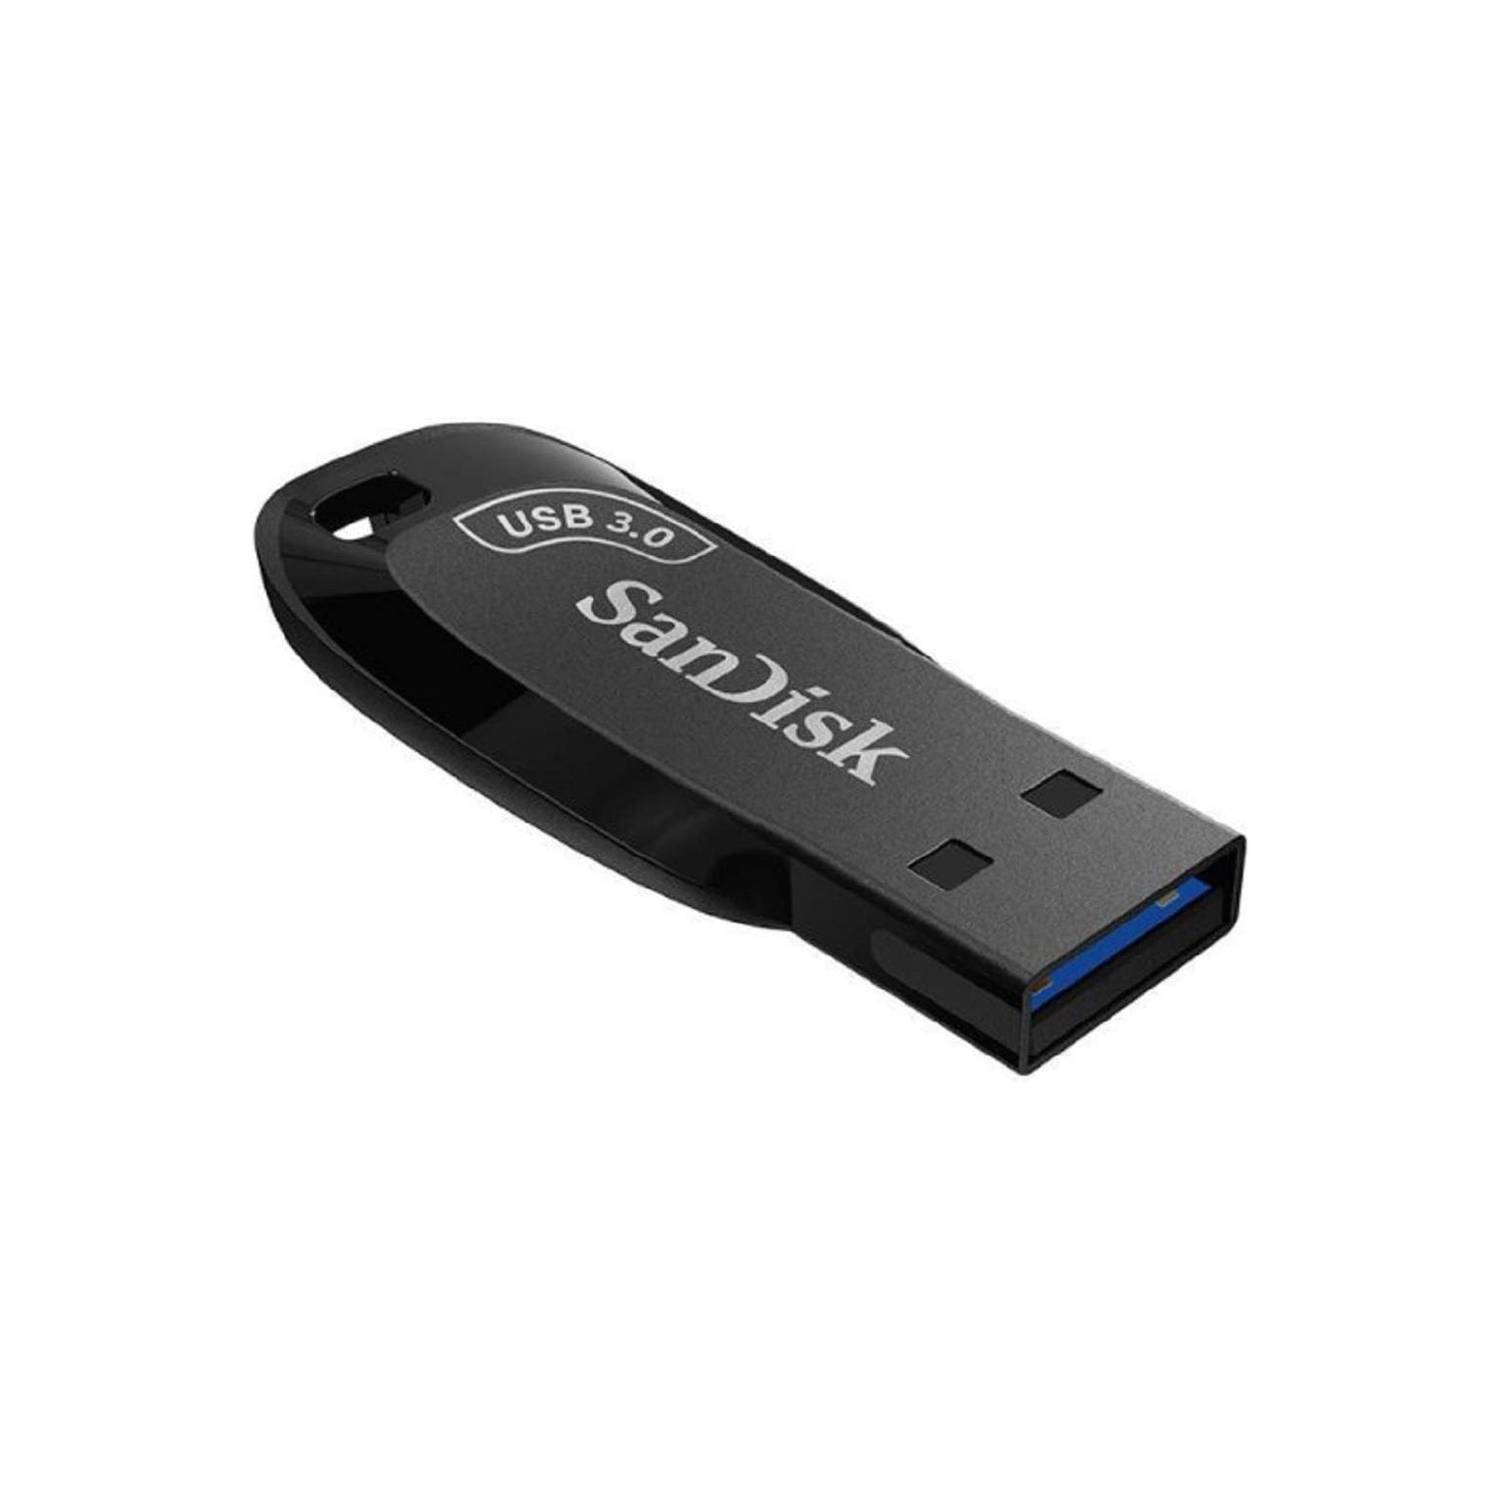 Pendrive 128GB SanDisk Ultra Shift USB 3.0 Tipo-C